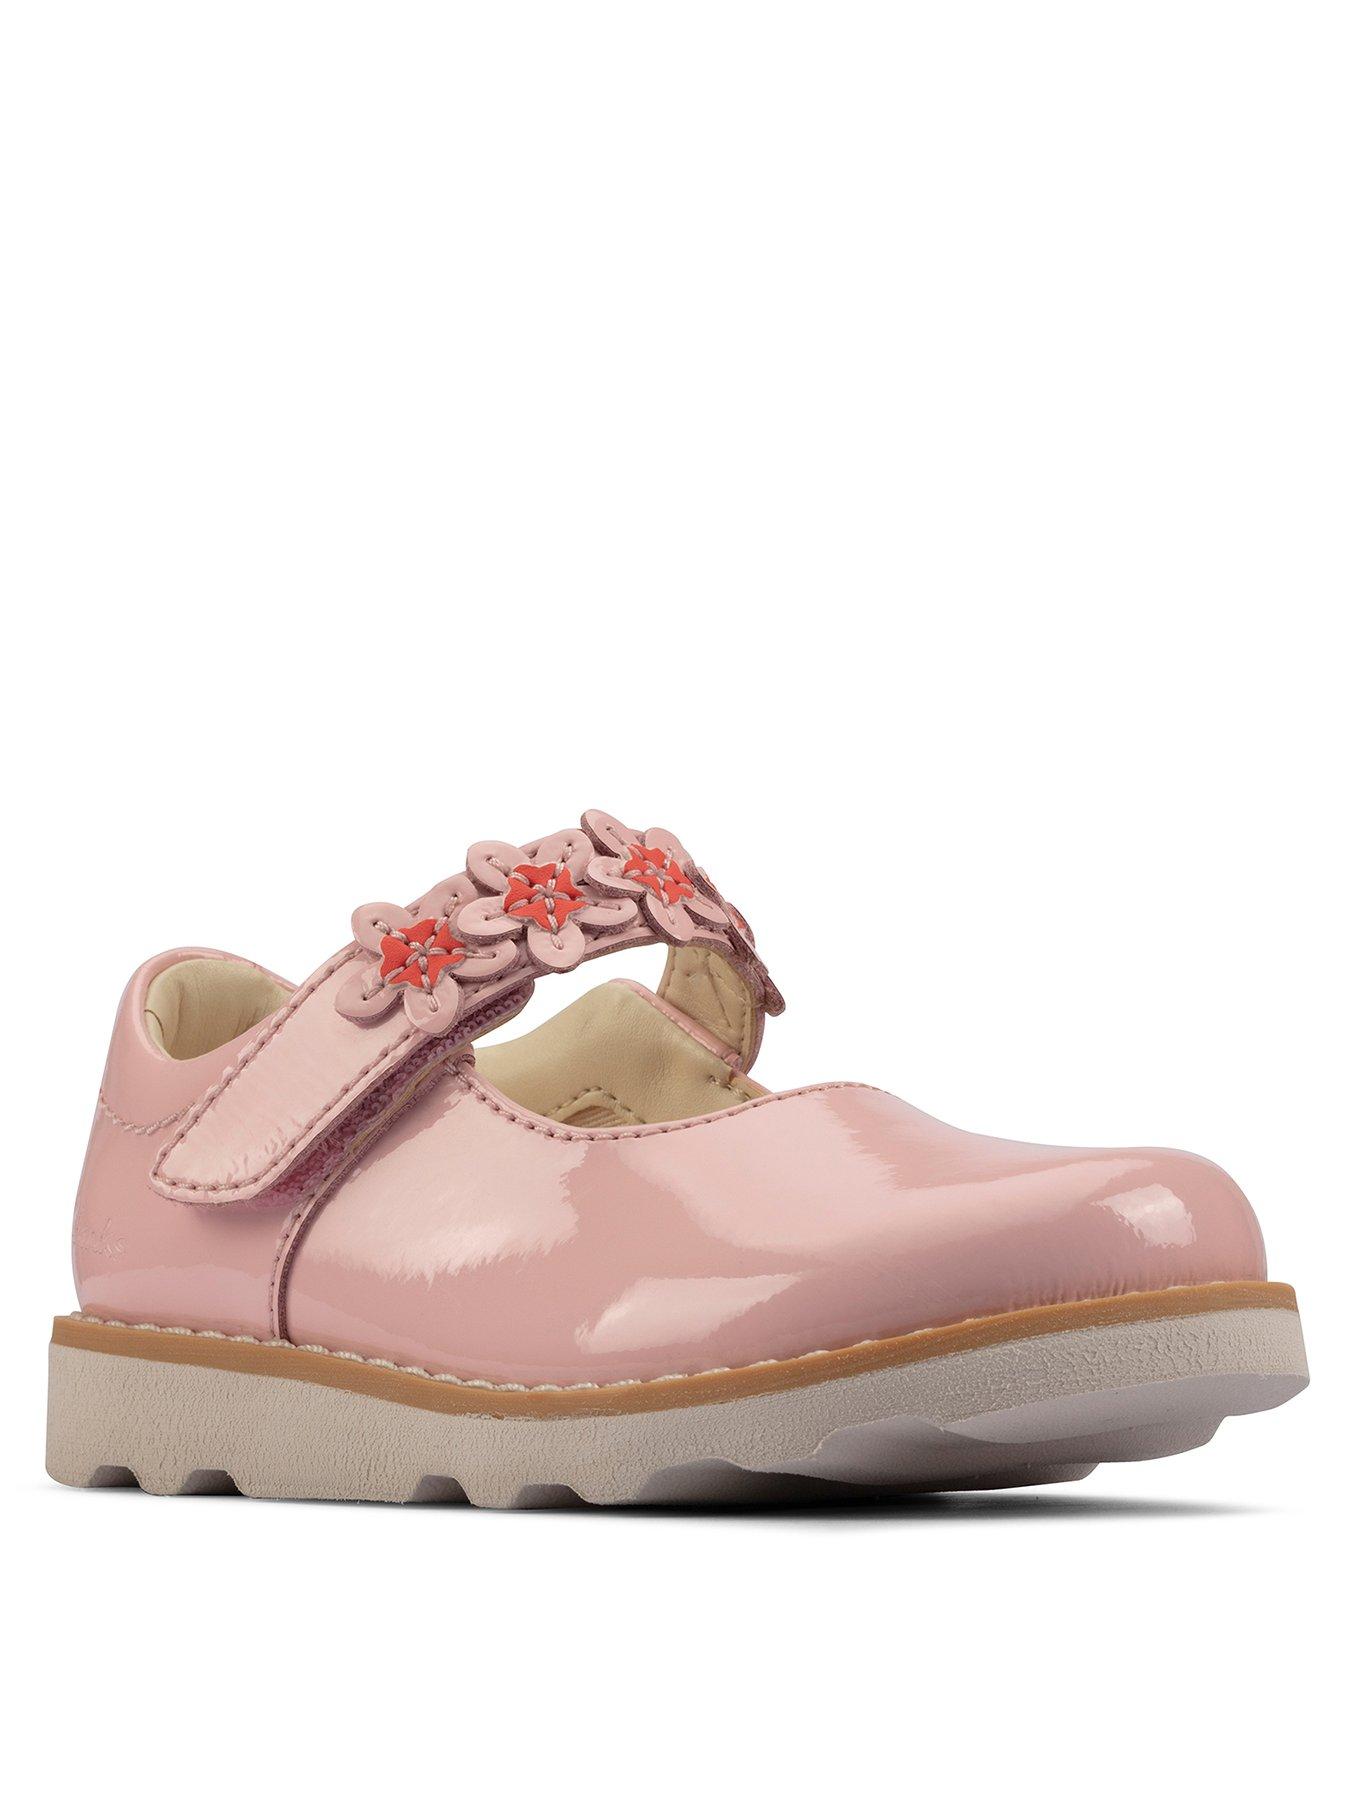 Shoes & boots Crown Petal Toddler Shoe - Light Pink